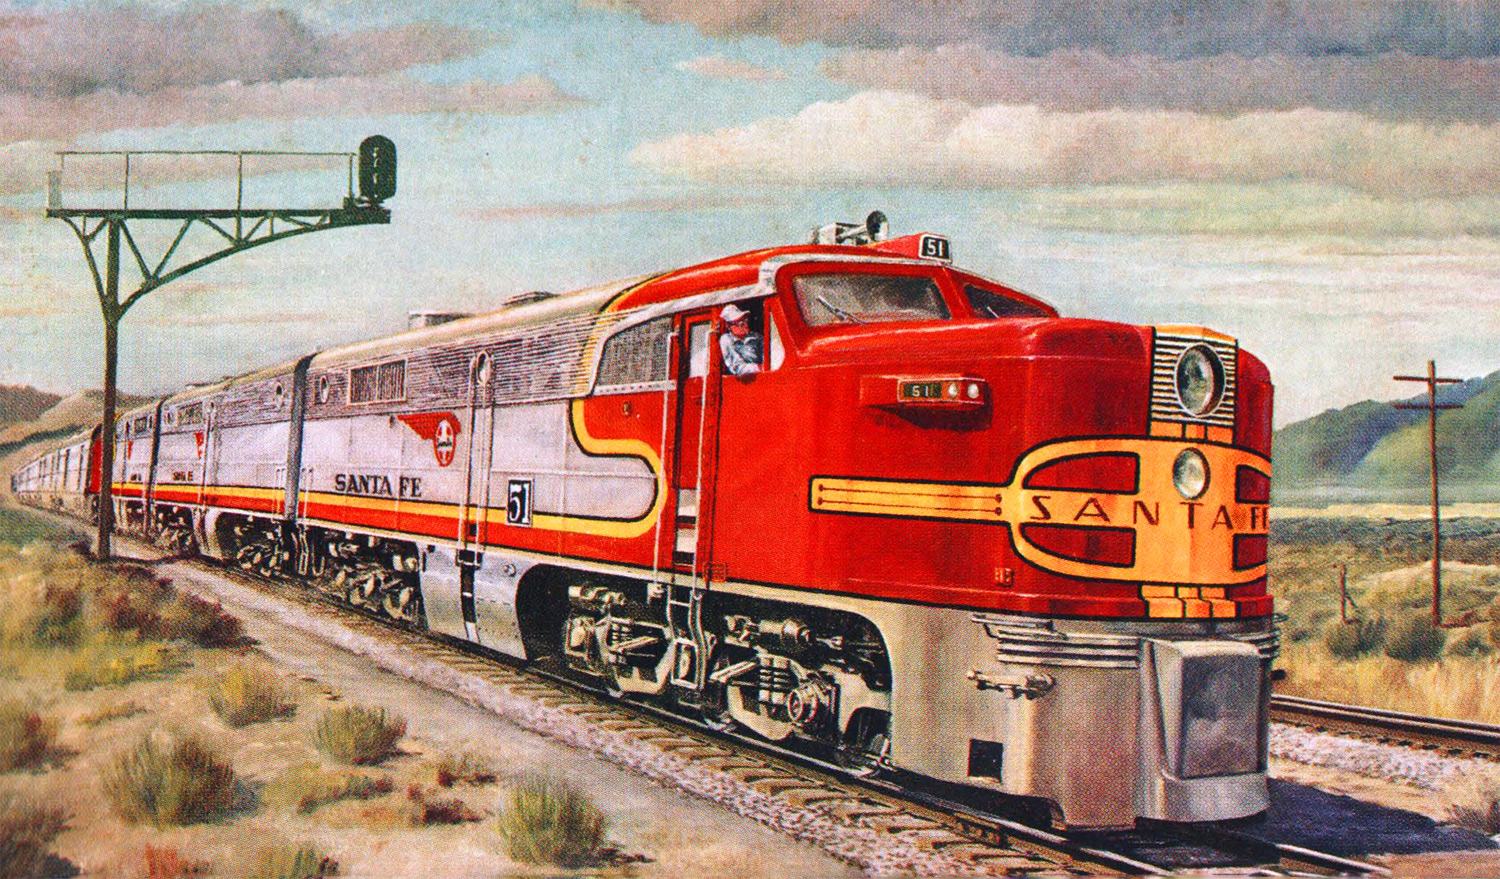 The Atchison, Topeka and Santa Fe Railway